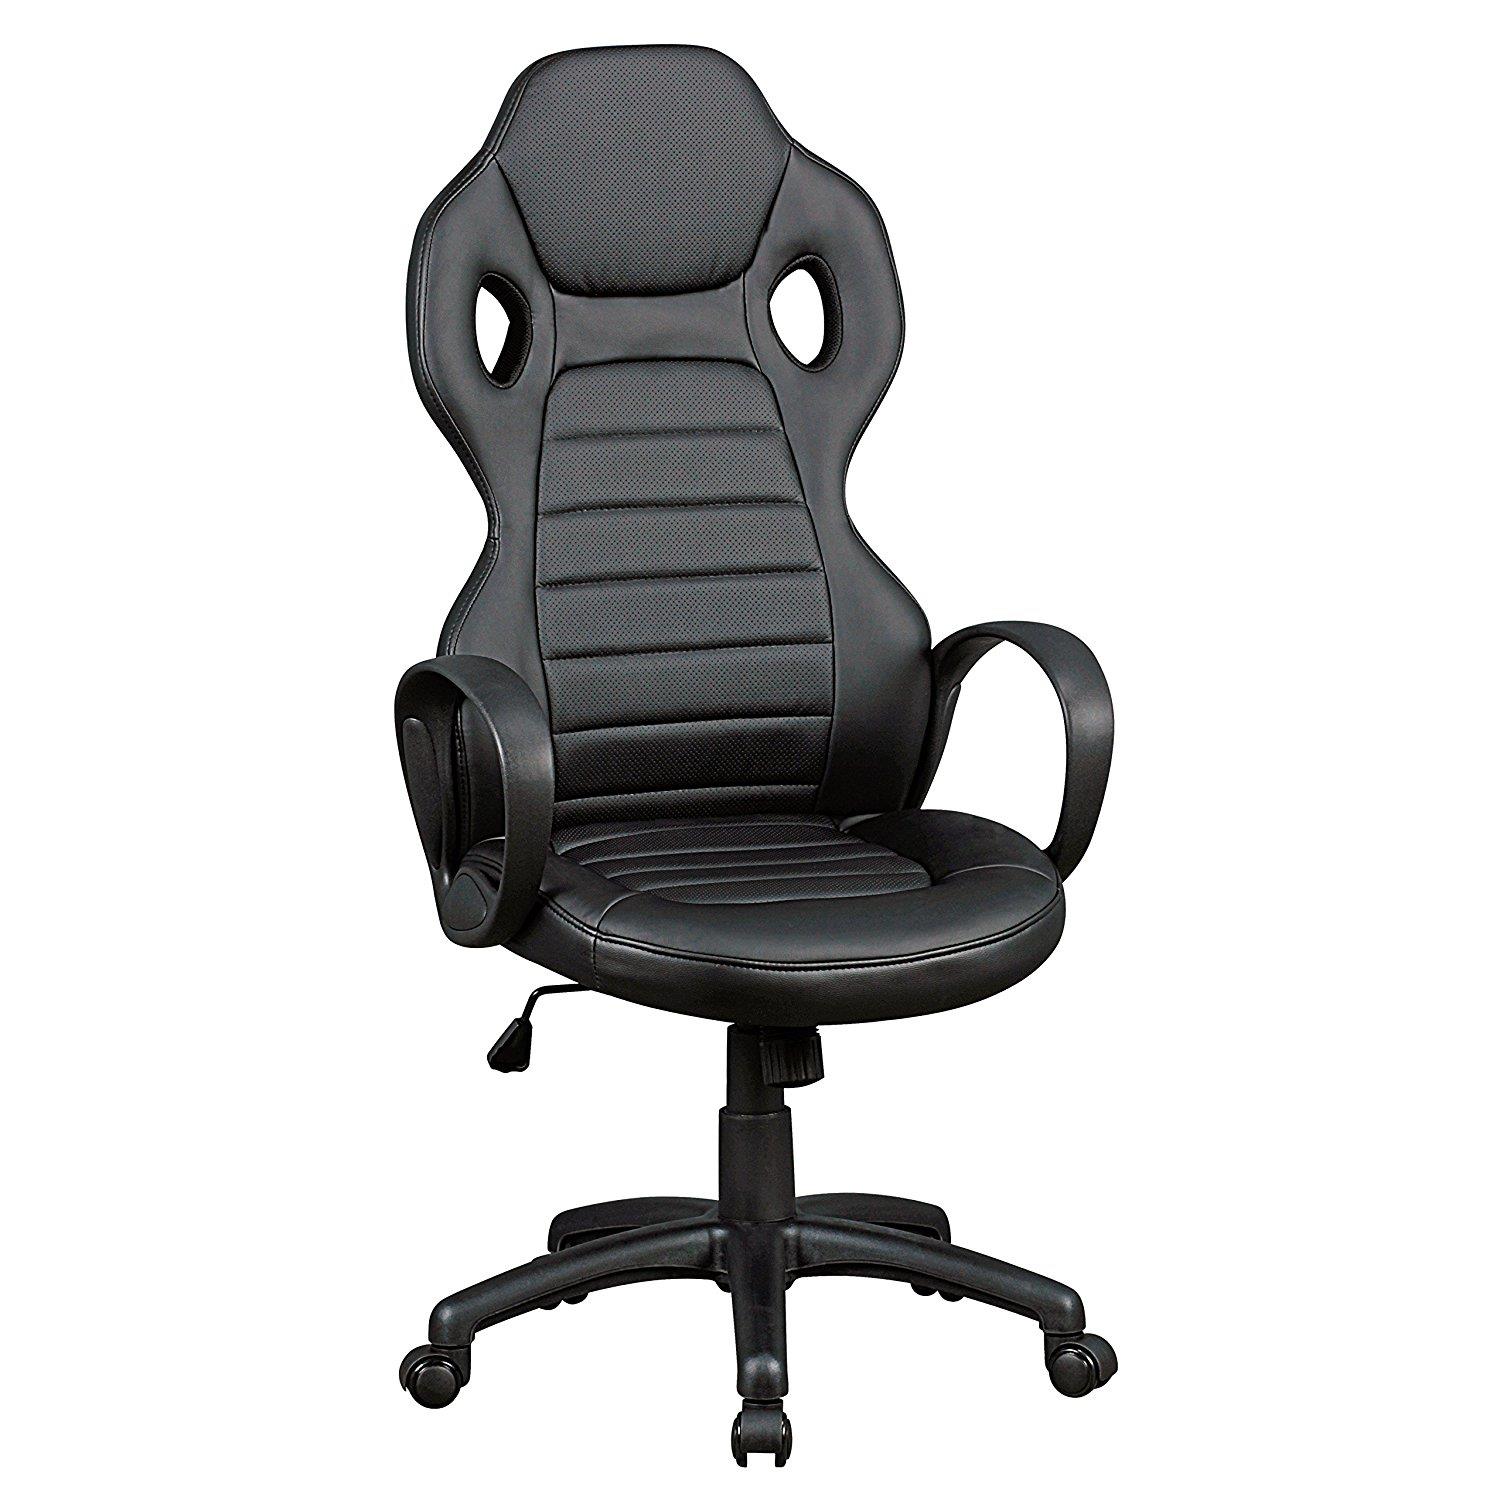 Gaming-Stuhl TUKANA, sportliches Design, hohe Rückenlehne, Lederbezug, Farbe Schwarz